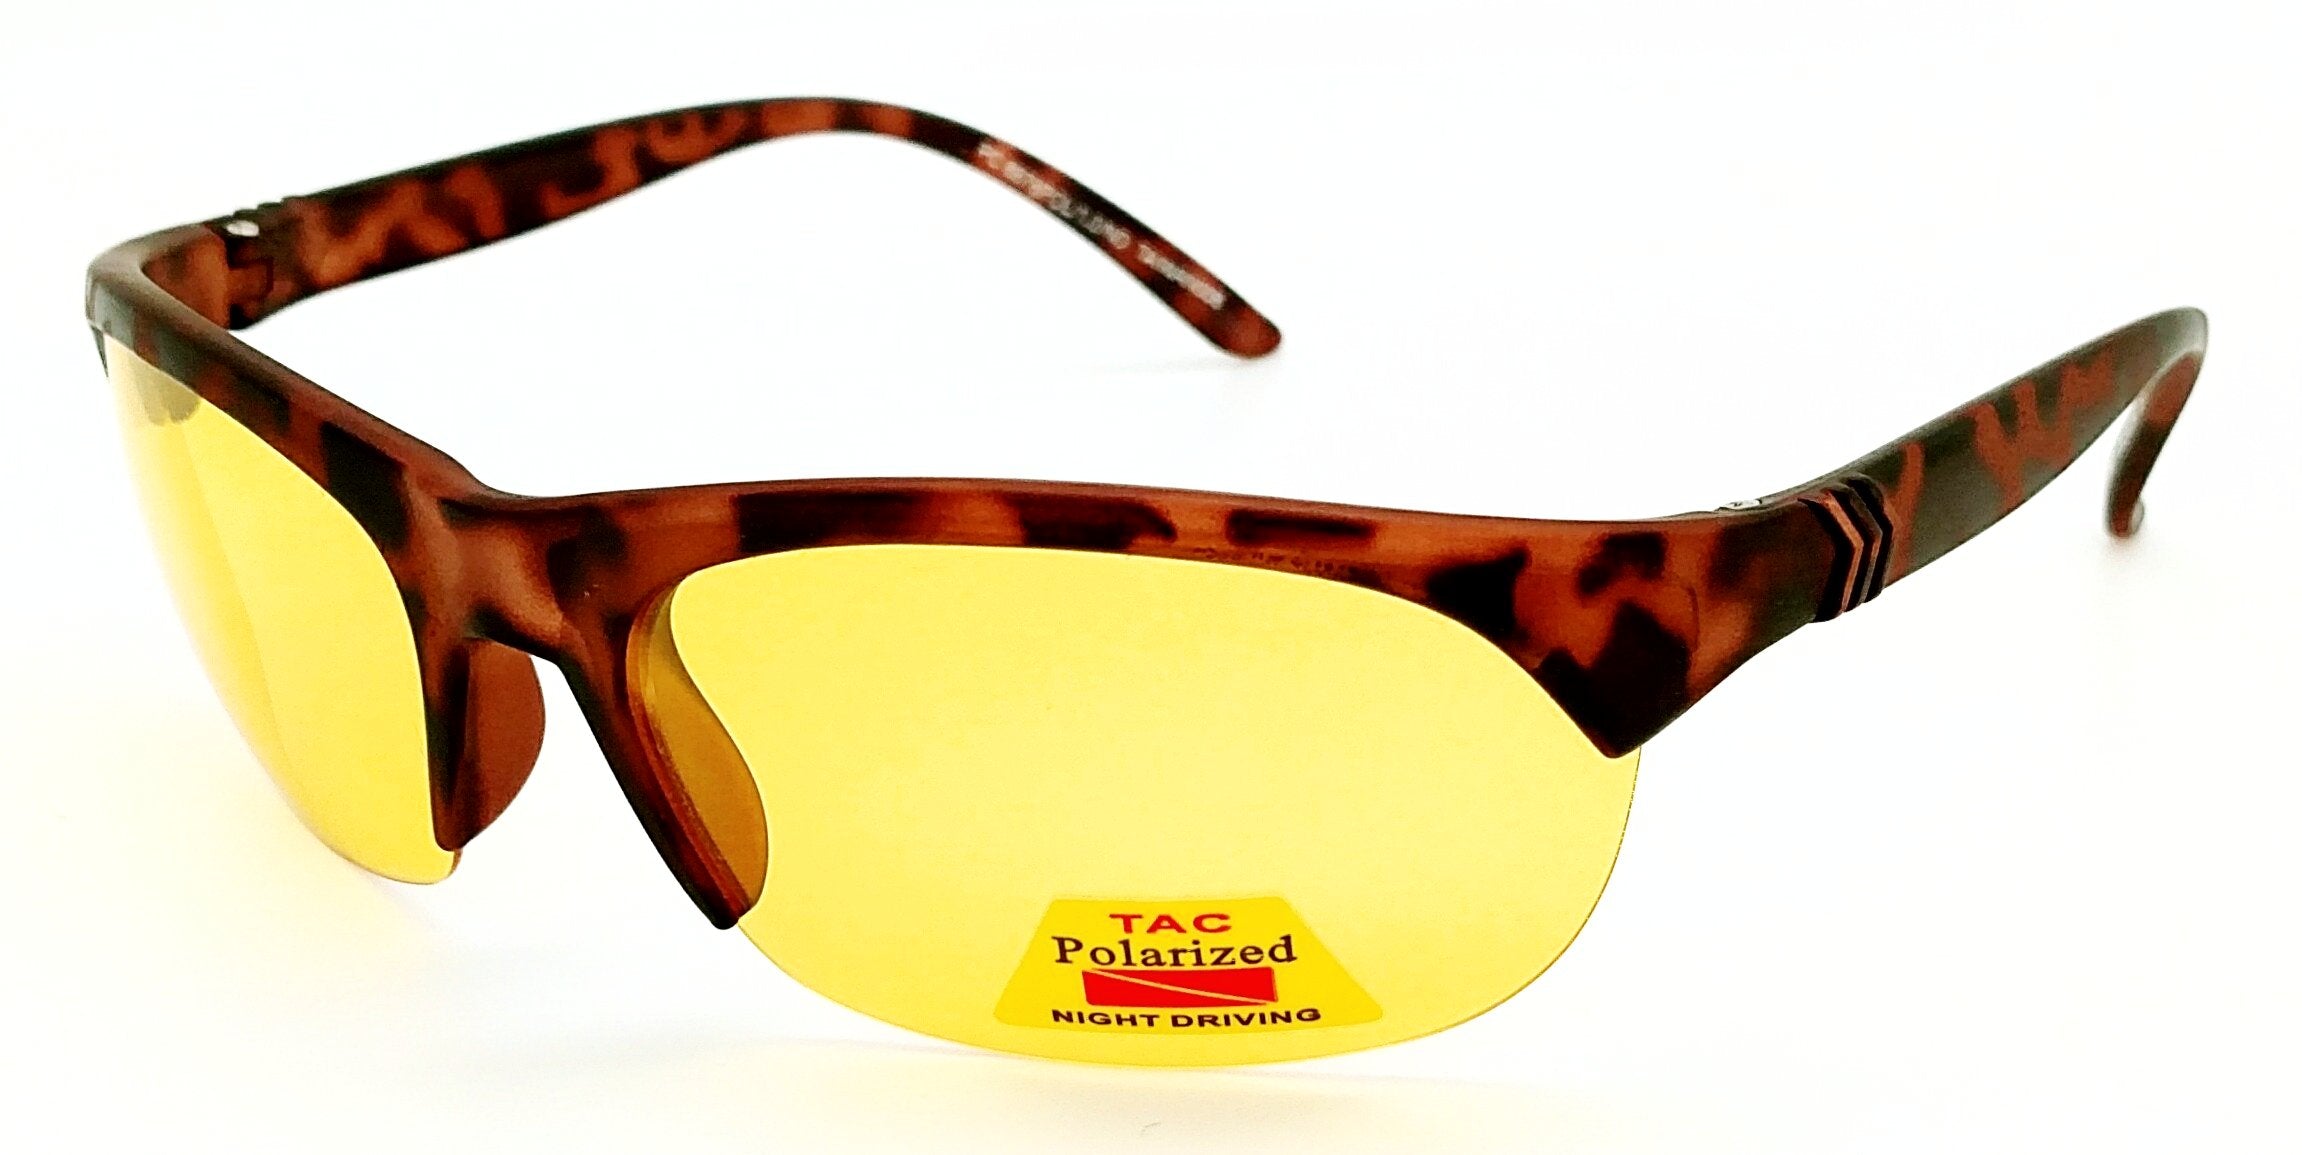 FOCUS ANTI-GLARE Night Driving Glasses Polarized Yellow Lens Reduces Glare Blade